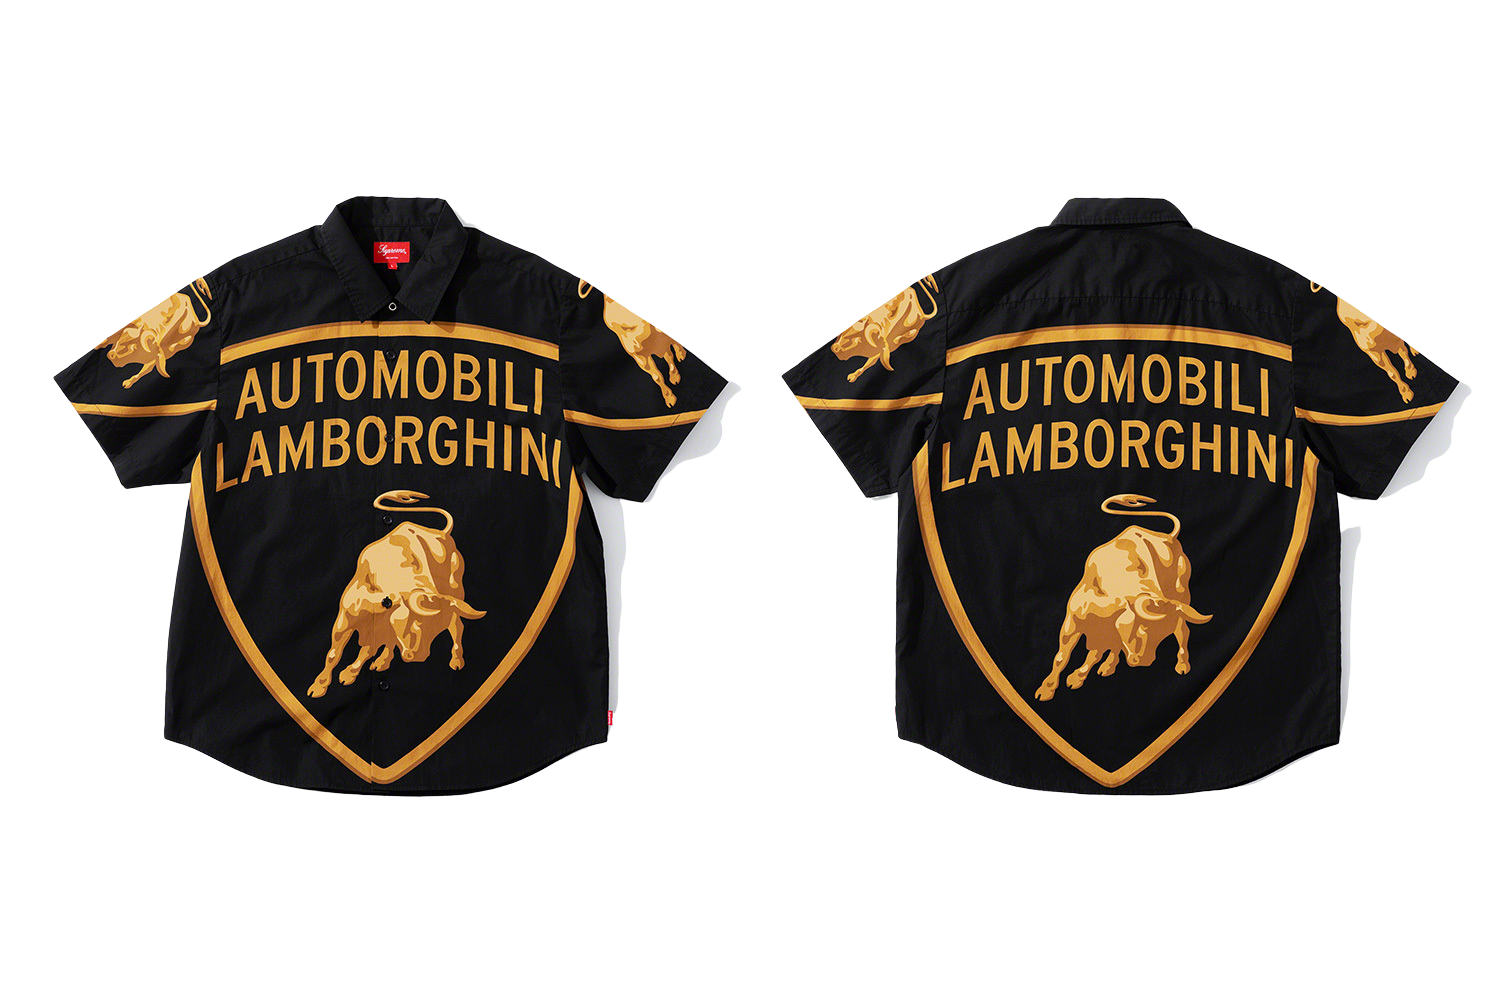 Automobili Lamborghini S S Shirt - spring summer 2020 - Supreme